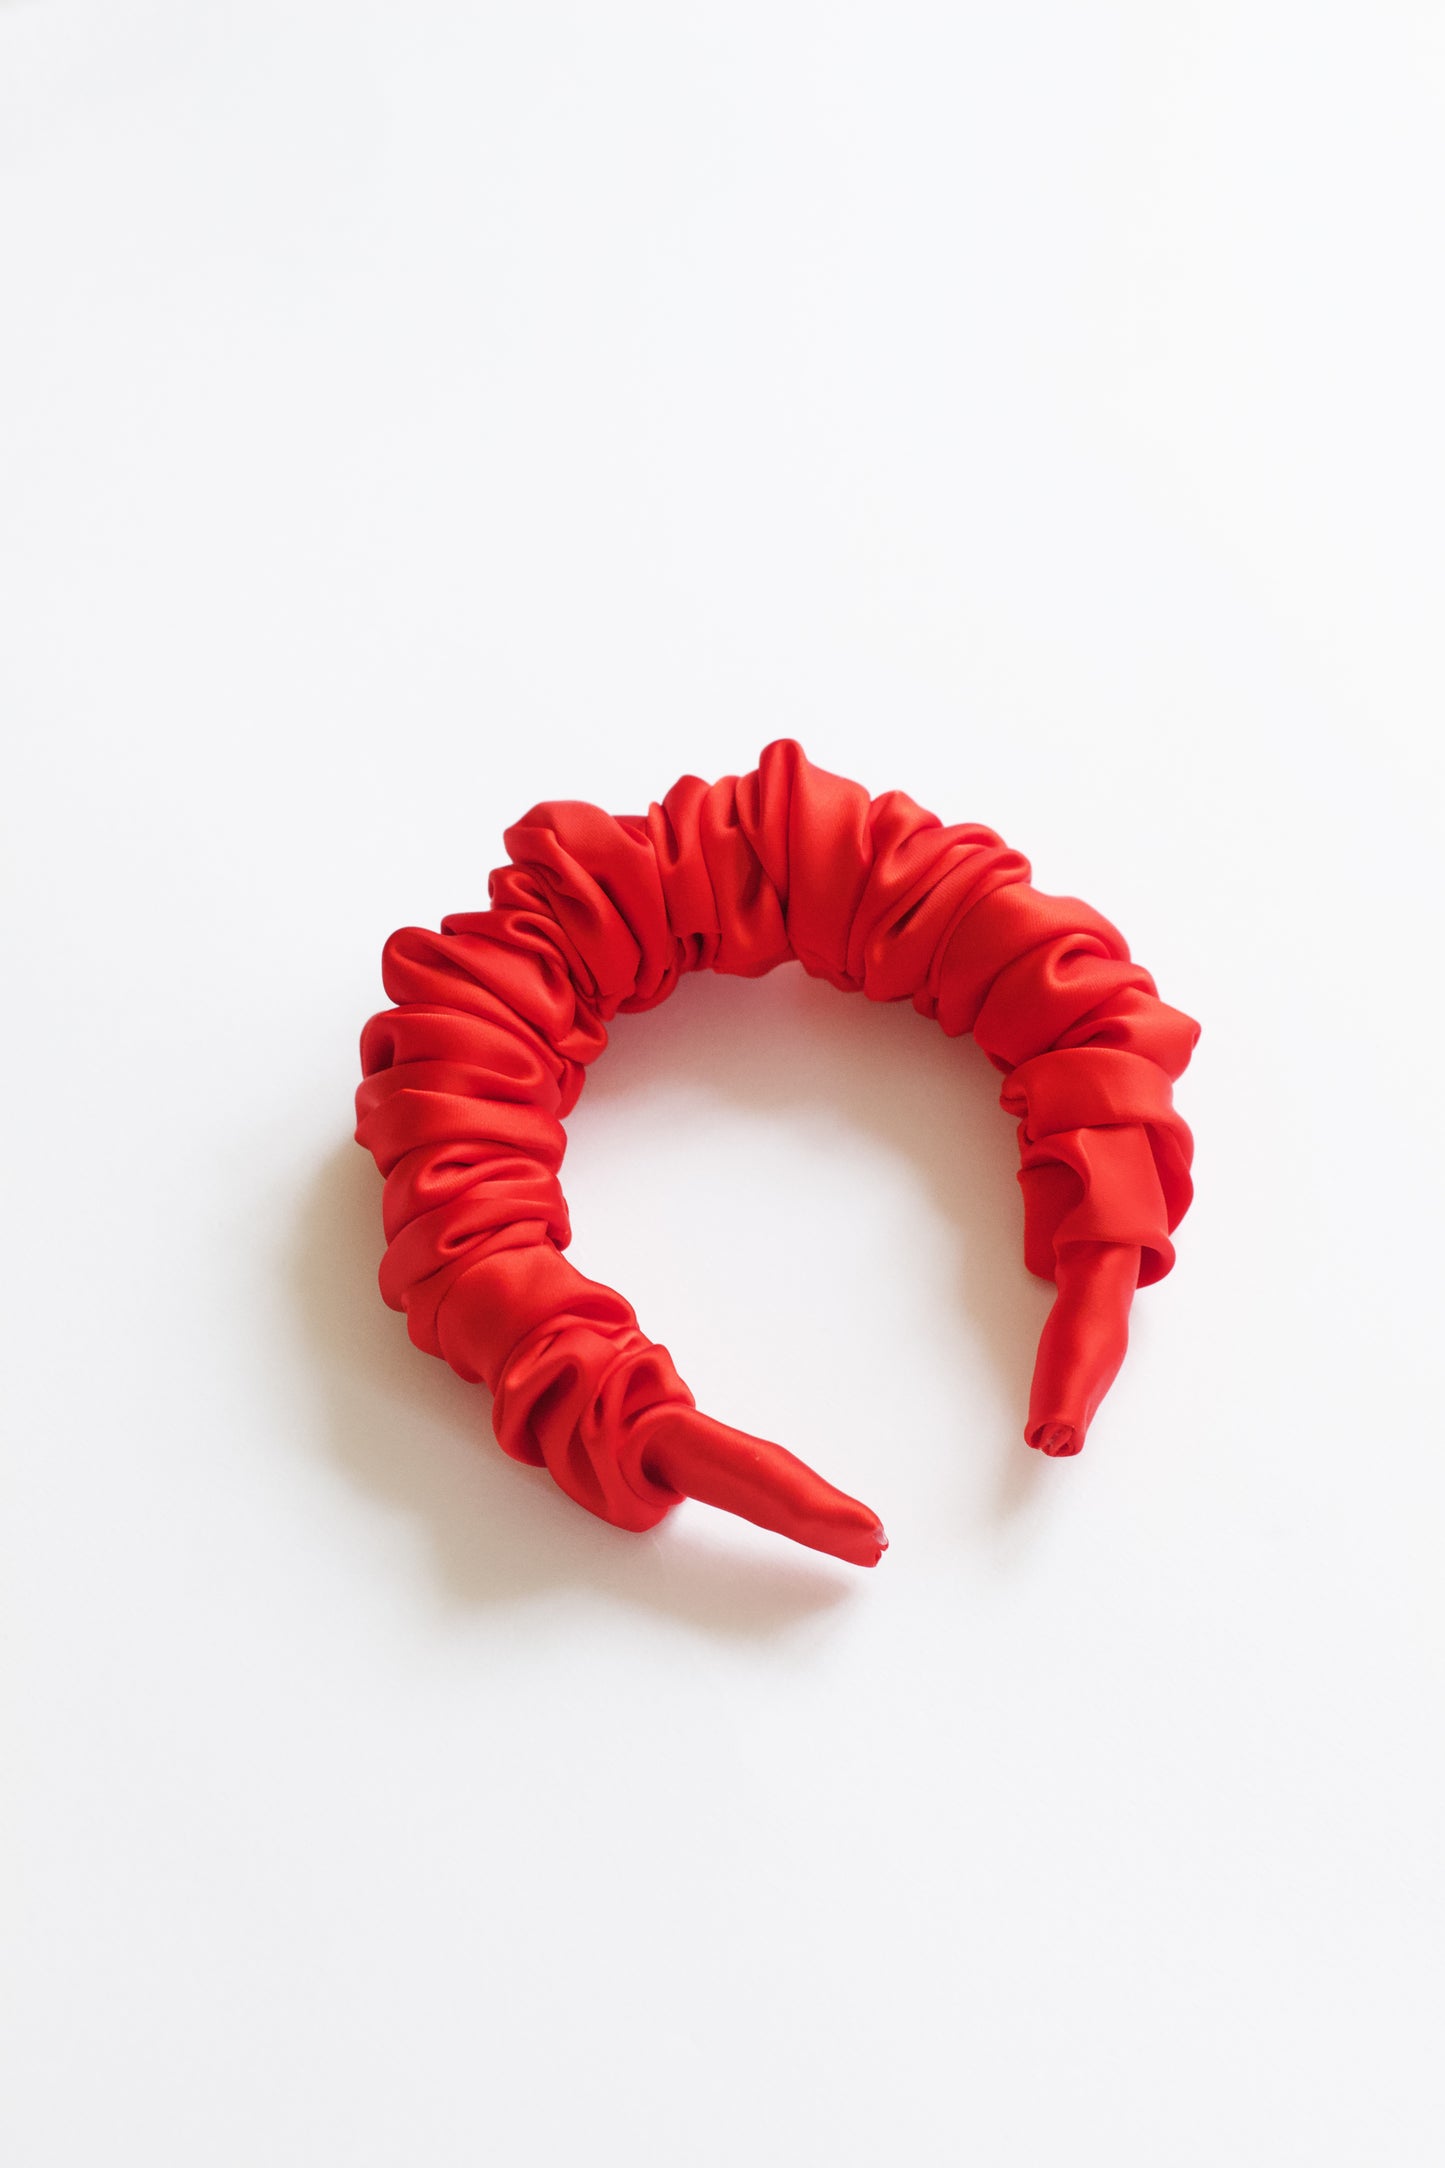 Red Satin Scrunchie Headband - Small